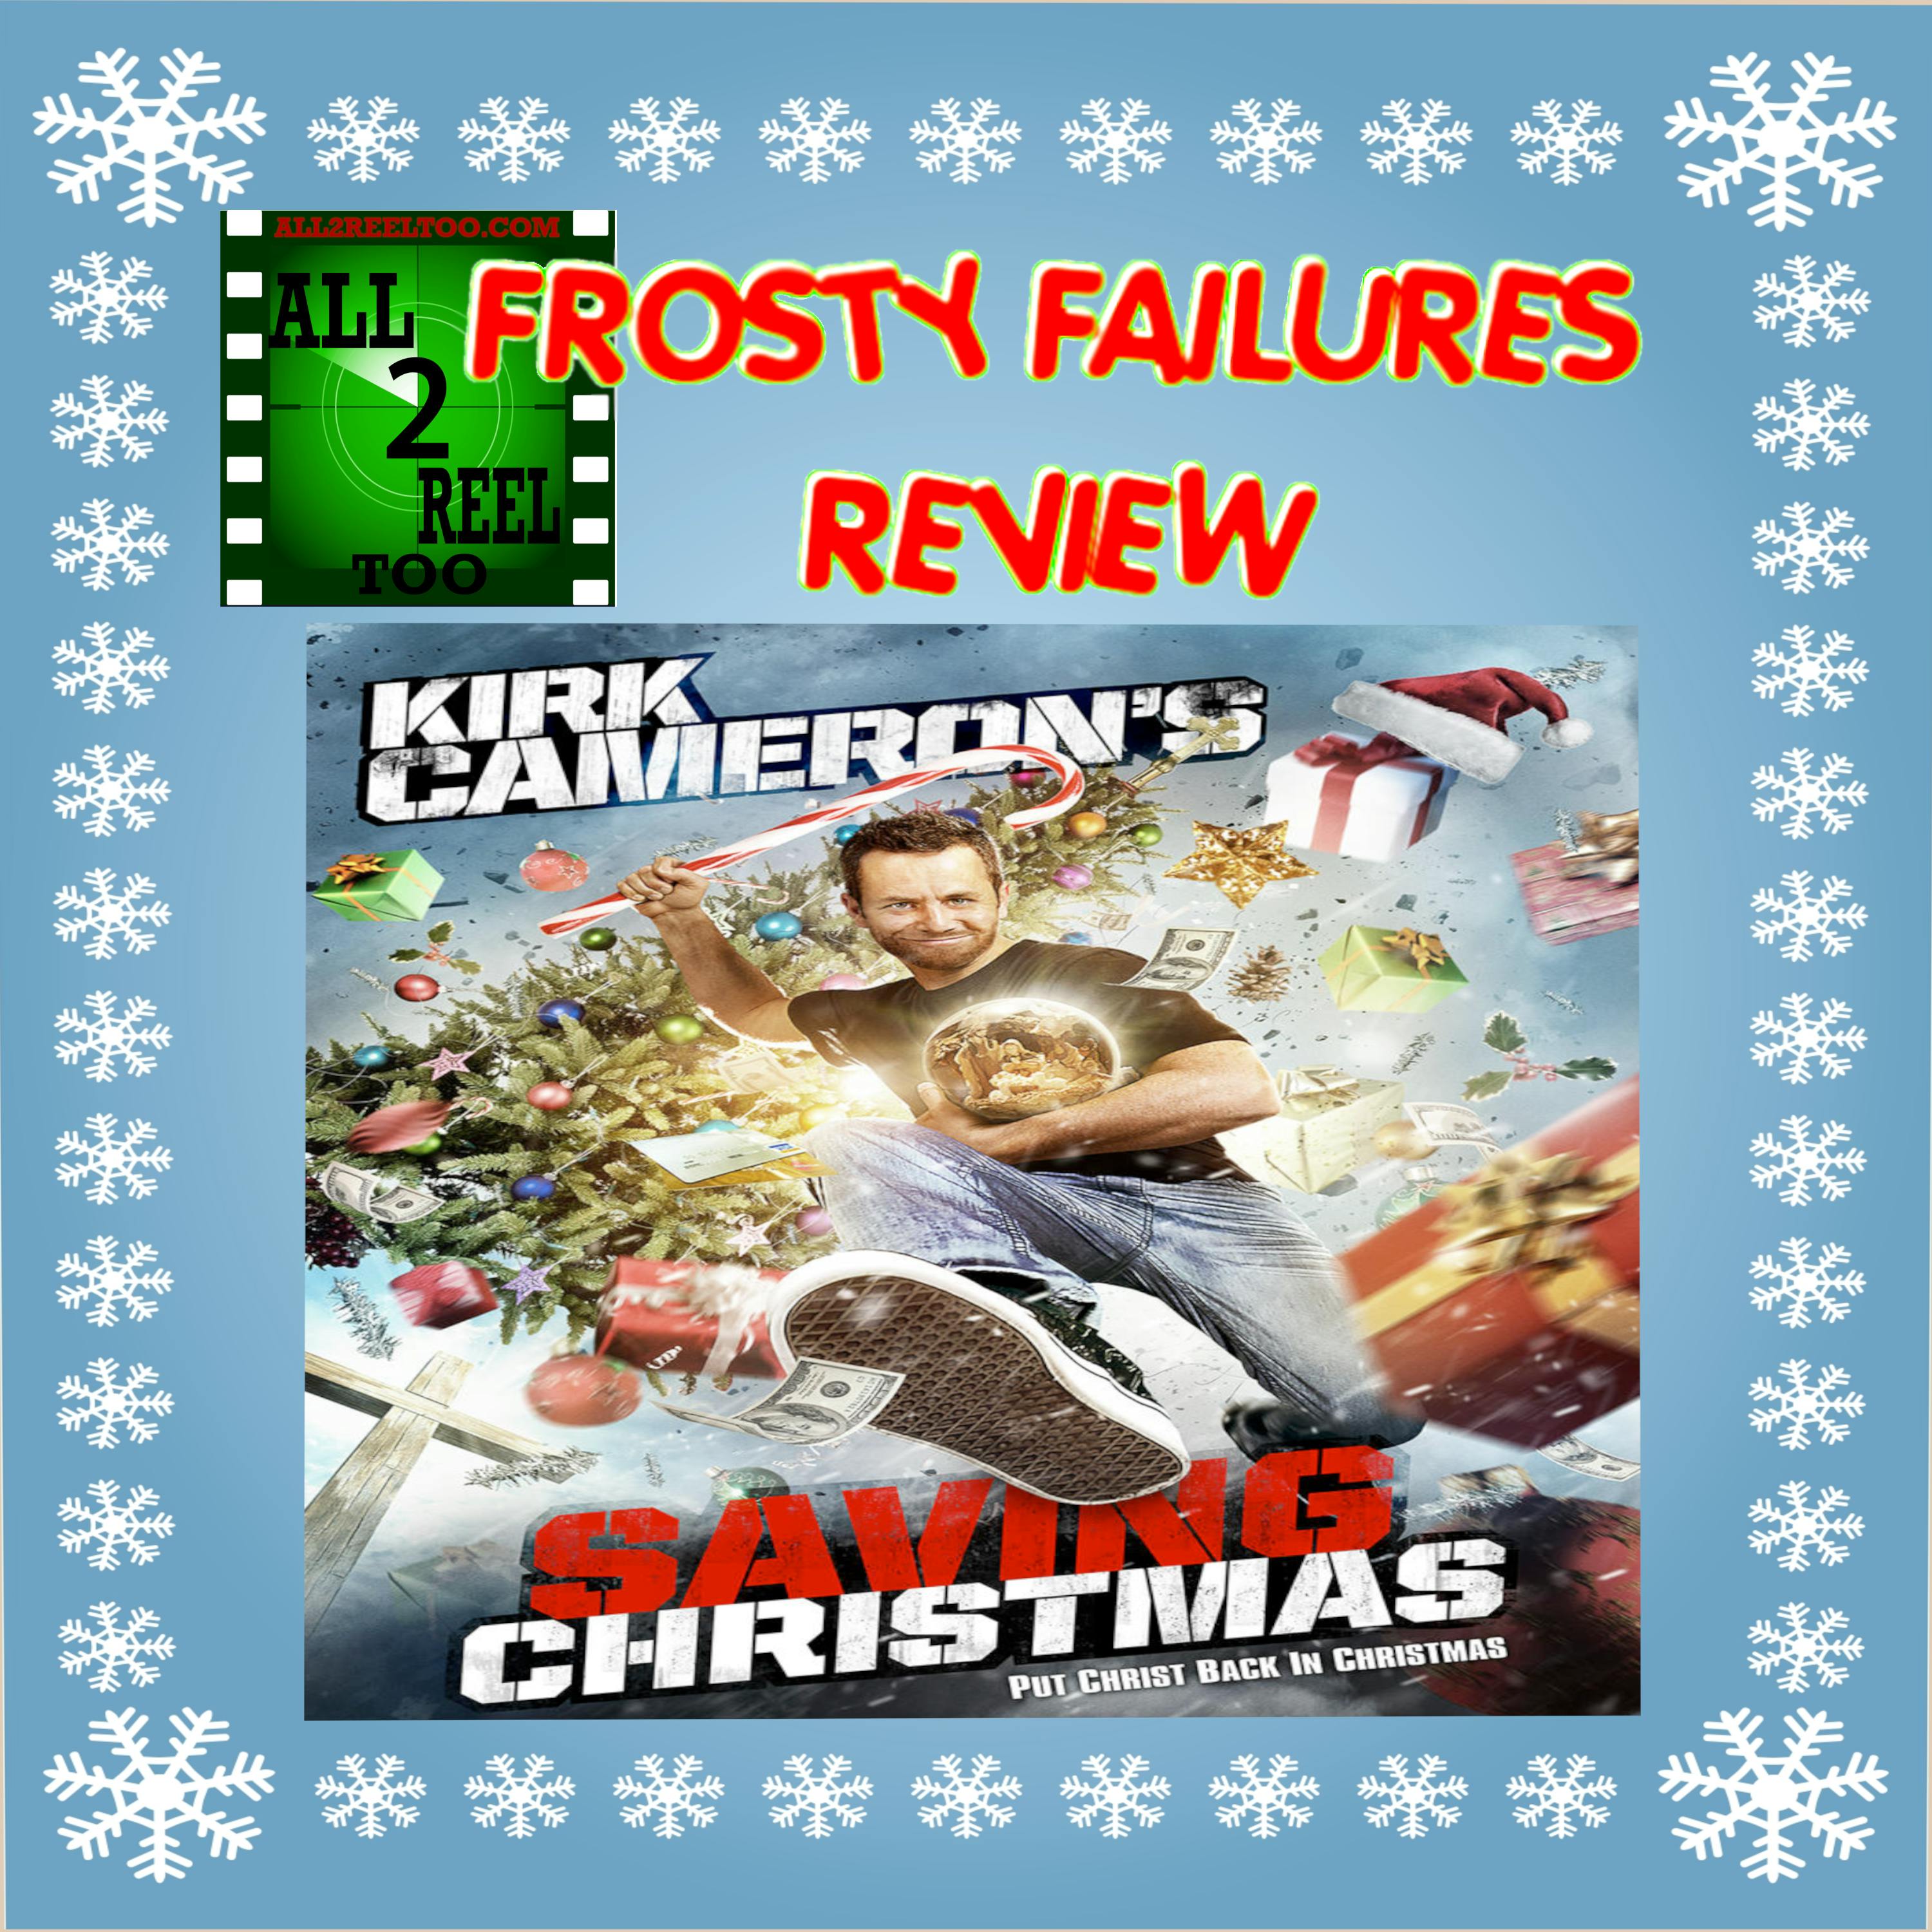 Kirk Cameron's Saving Christmas (2014) - FROSTY FAILURES REVIEW